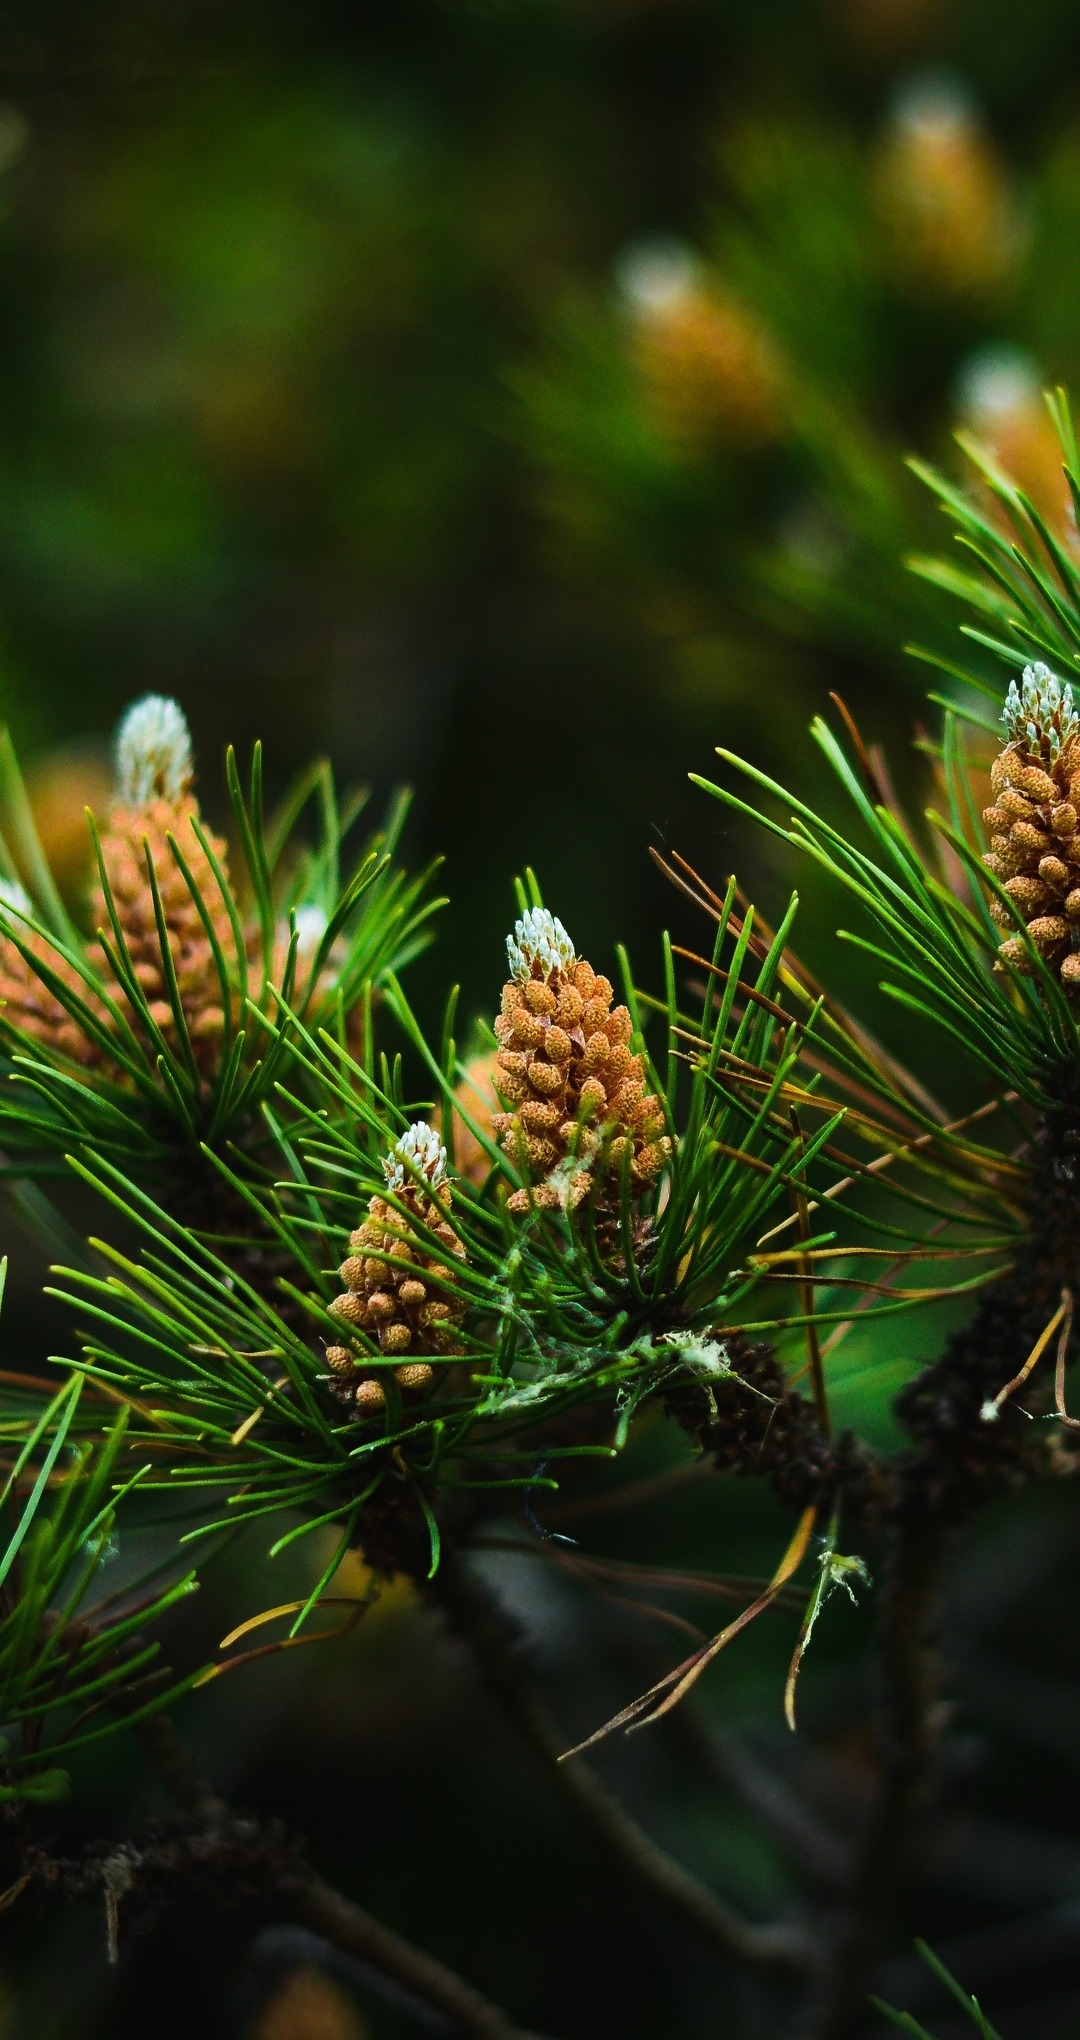 Image: Pine, needles, cones, branches